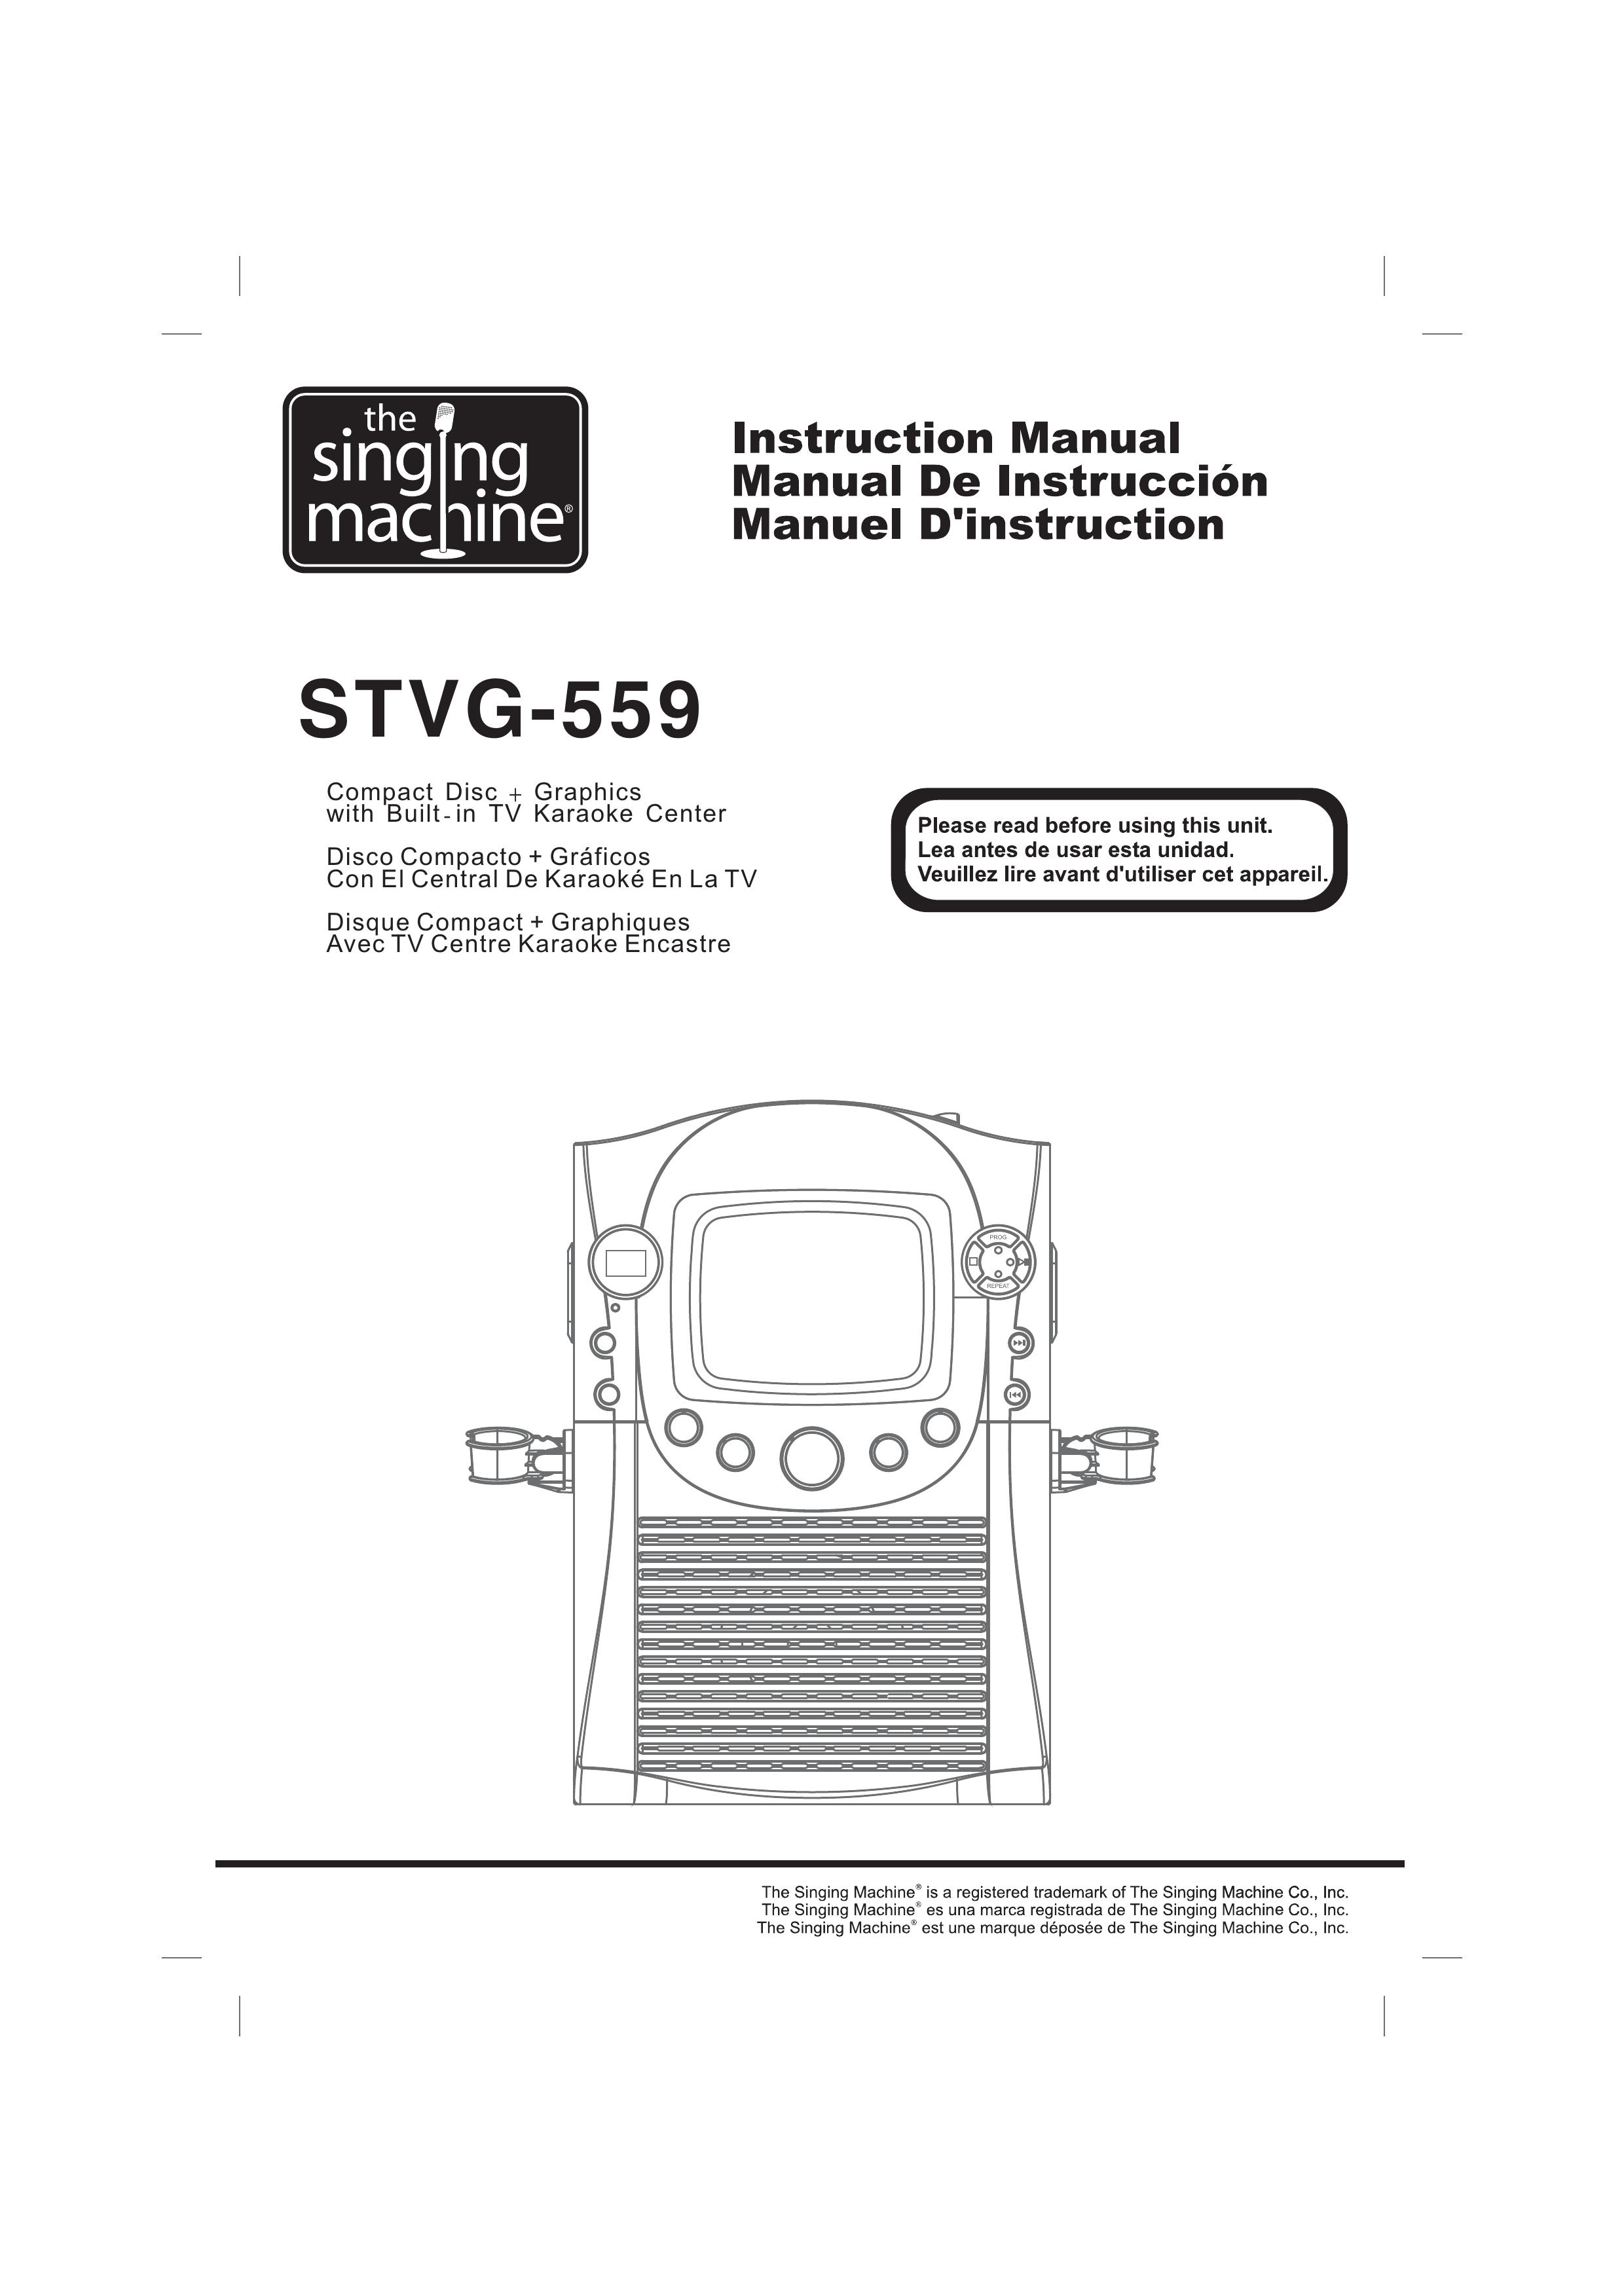 The Singing Machine Compact Disc - Graphics with Built-In TV Karaoke Center Karaoke Machine User Manual